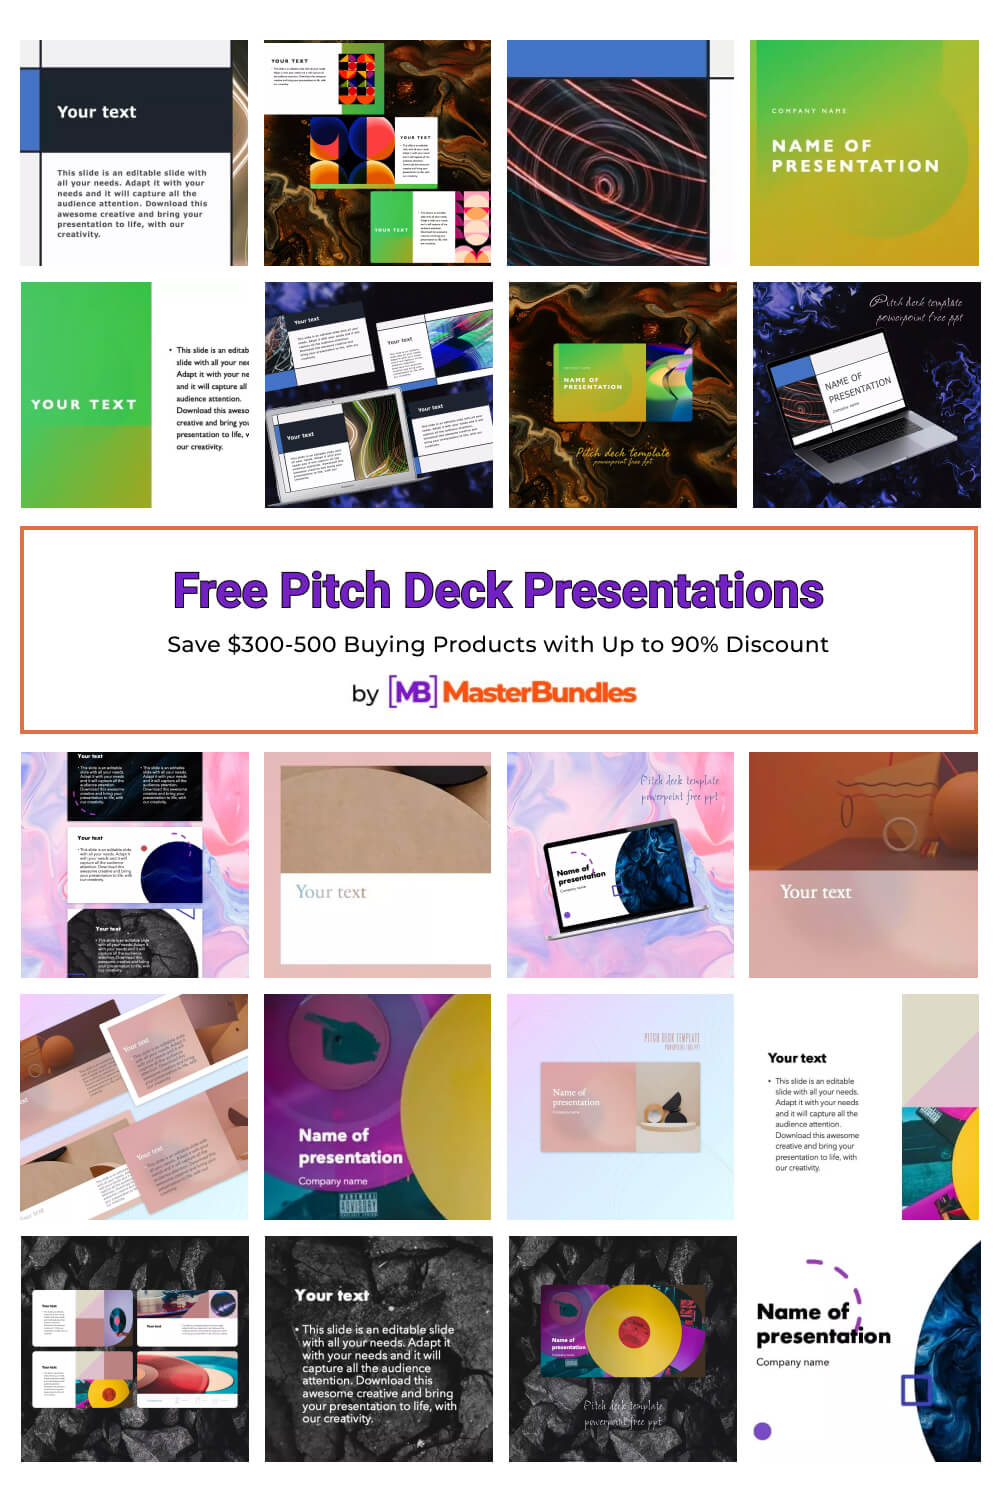 free pitch deck presentations pinterest image.